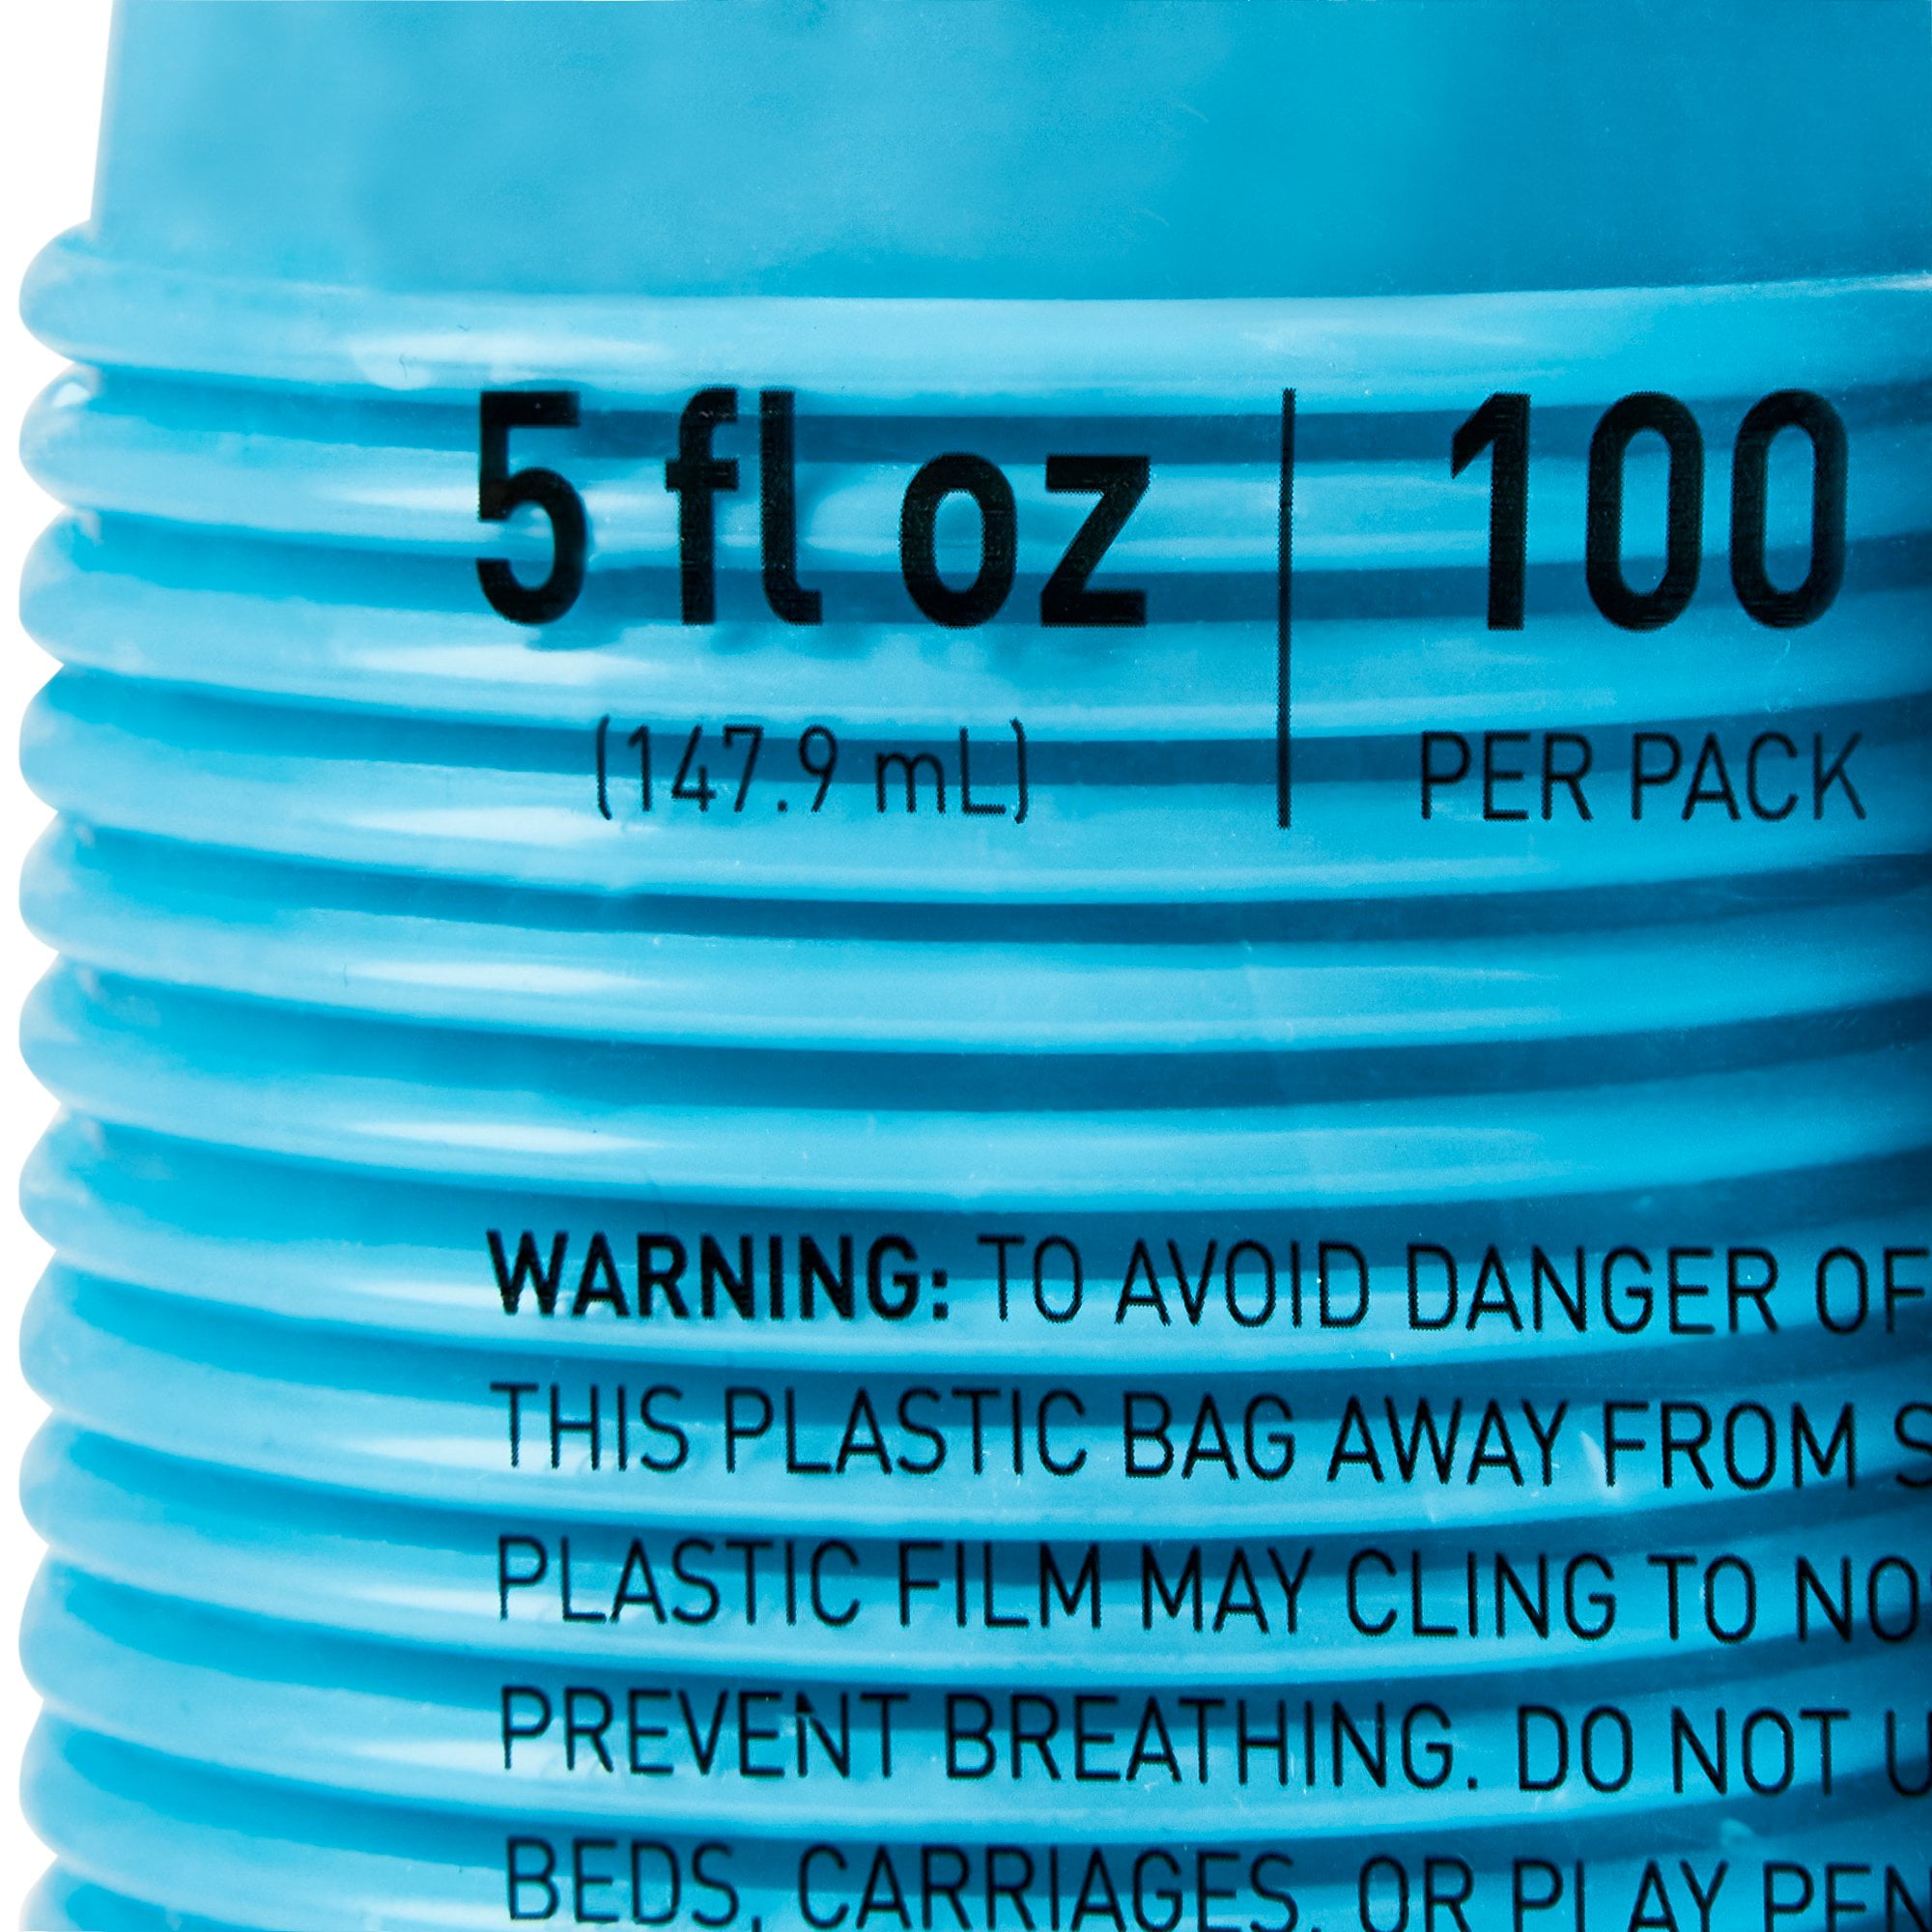 McKesson Plastic Cups, Disposable - Blue, 5 oz - Simply Medical